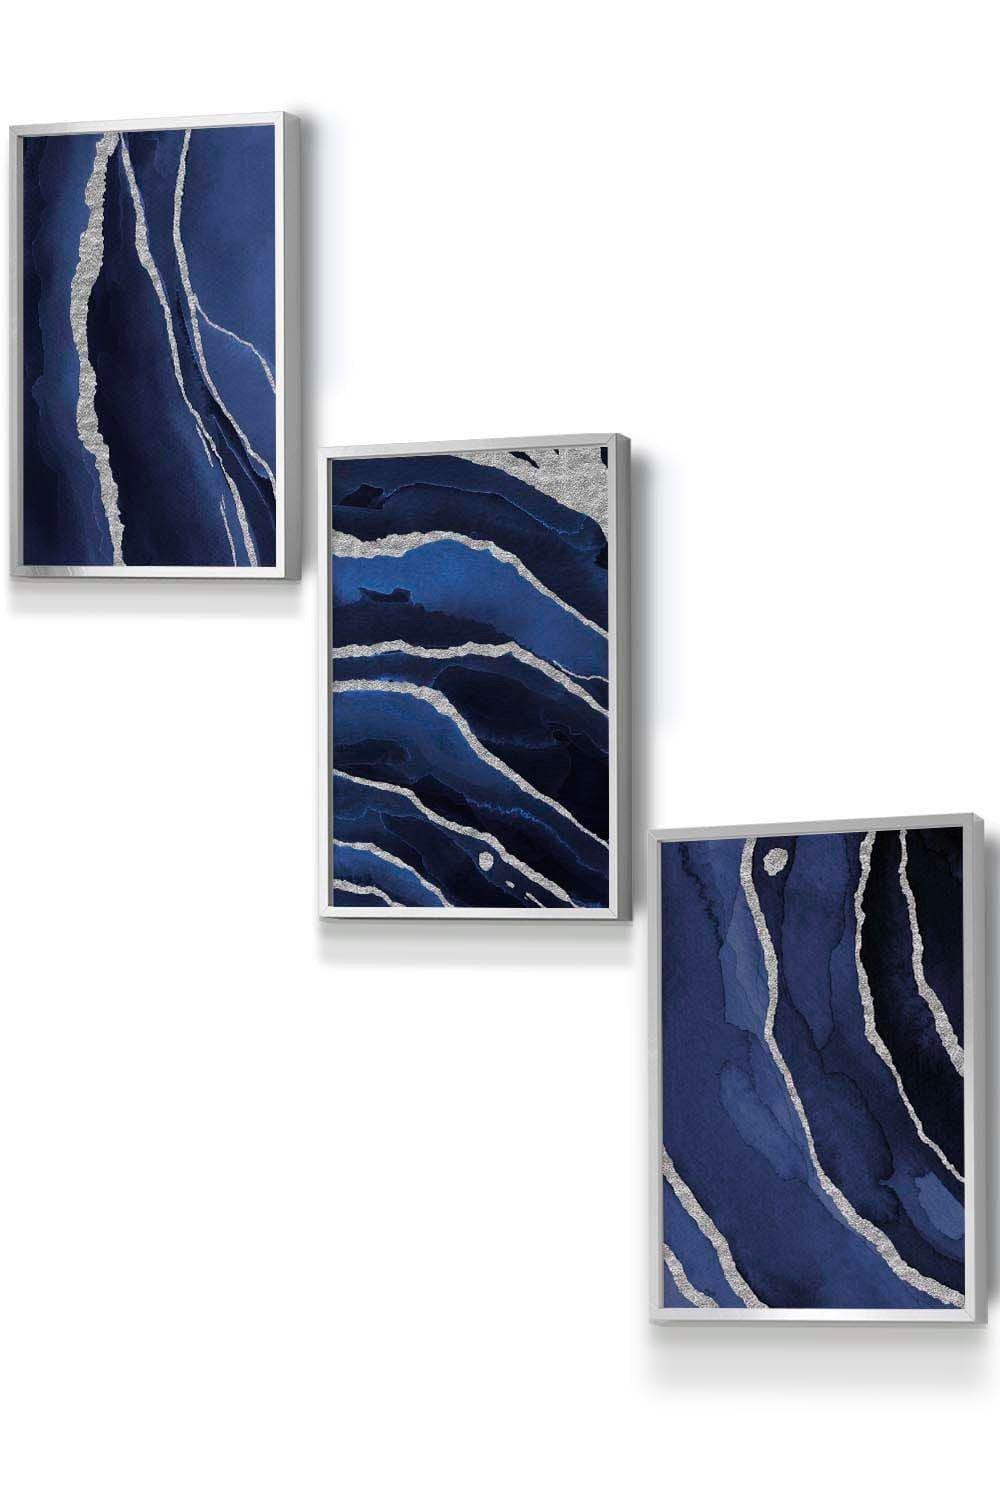 Abstract Navy Blue Silver Strokes Framed Wall Art - Small